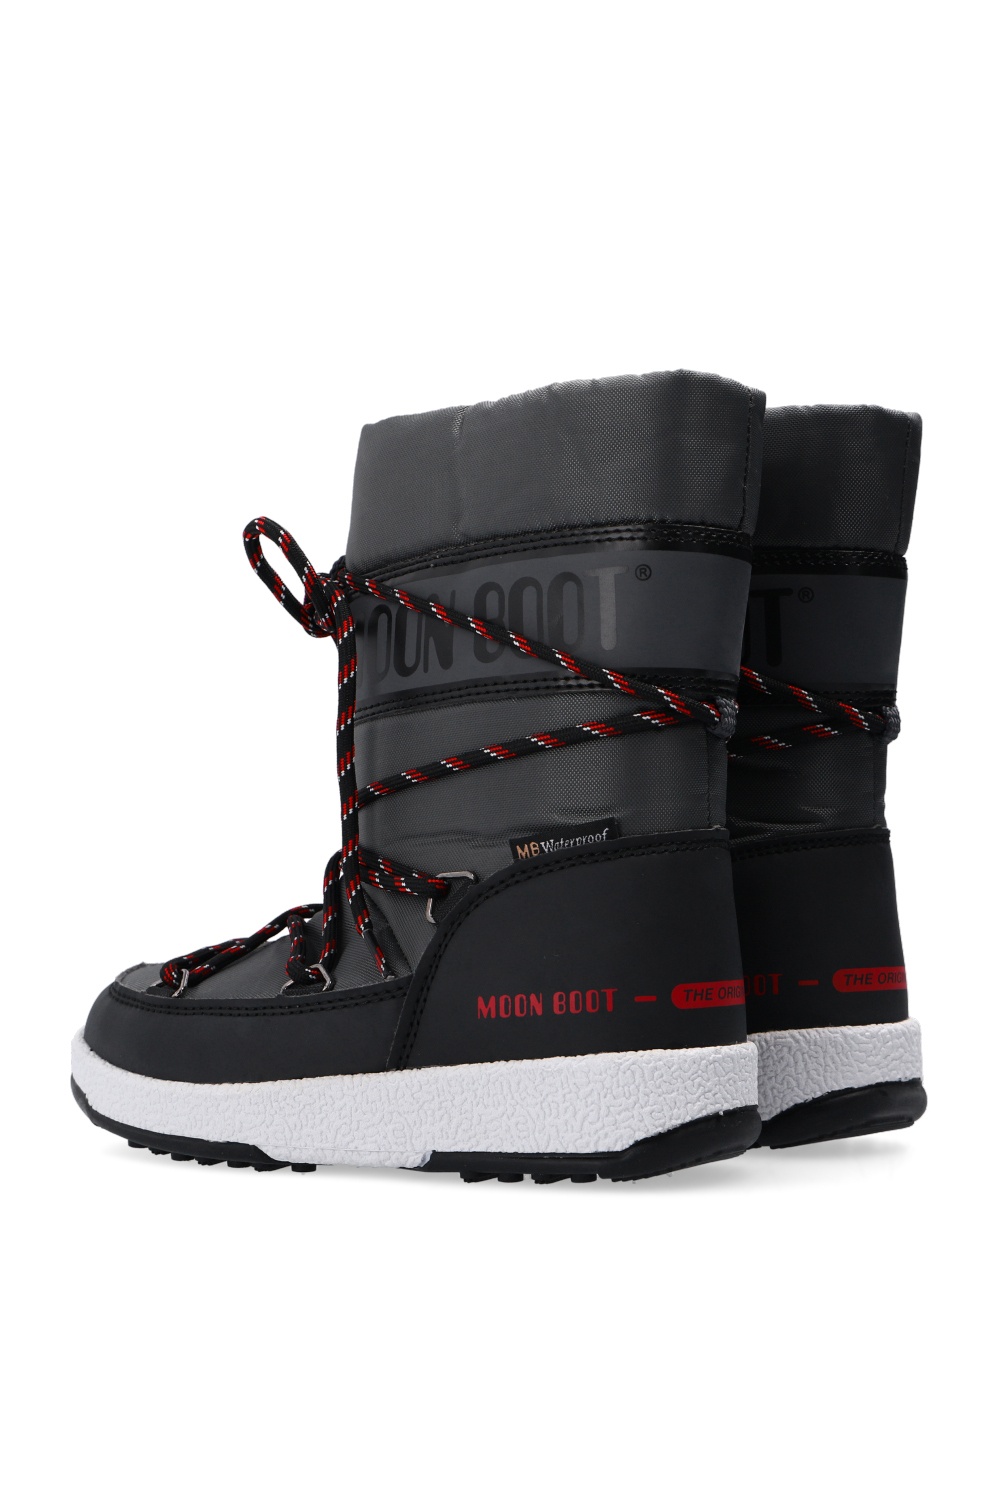 puma basket platform reset womens sneakers aruba ‘JR Boy’ snow boots